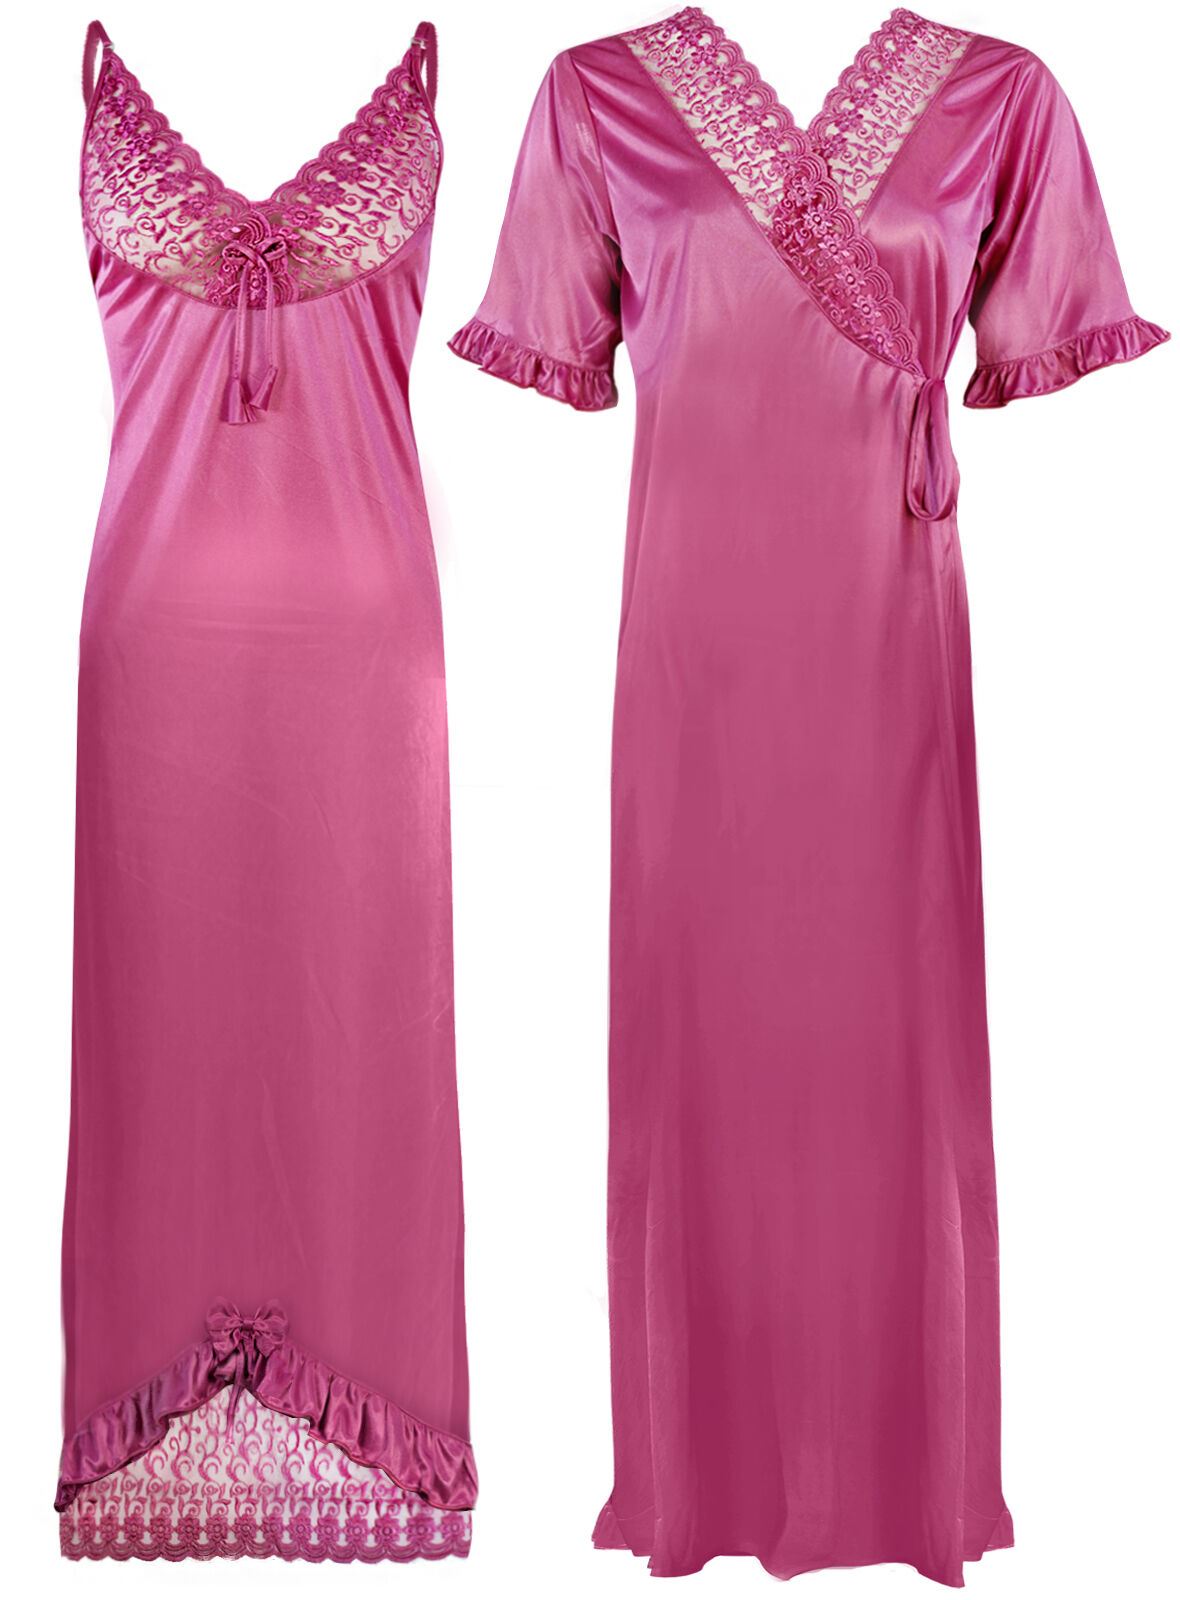 Pink / One Size: Regular (8-16) Designer Satin Nightwear Nighty and Robe The Orange Tags